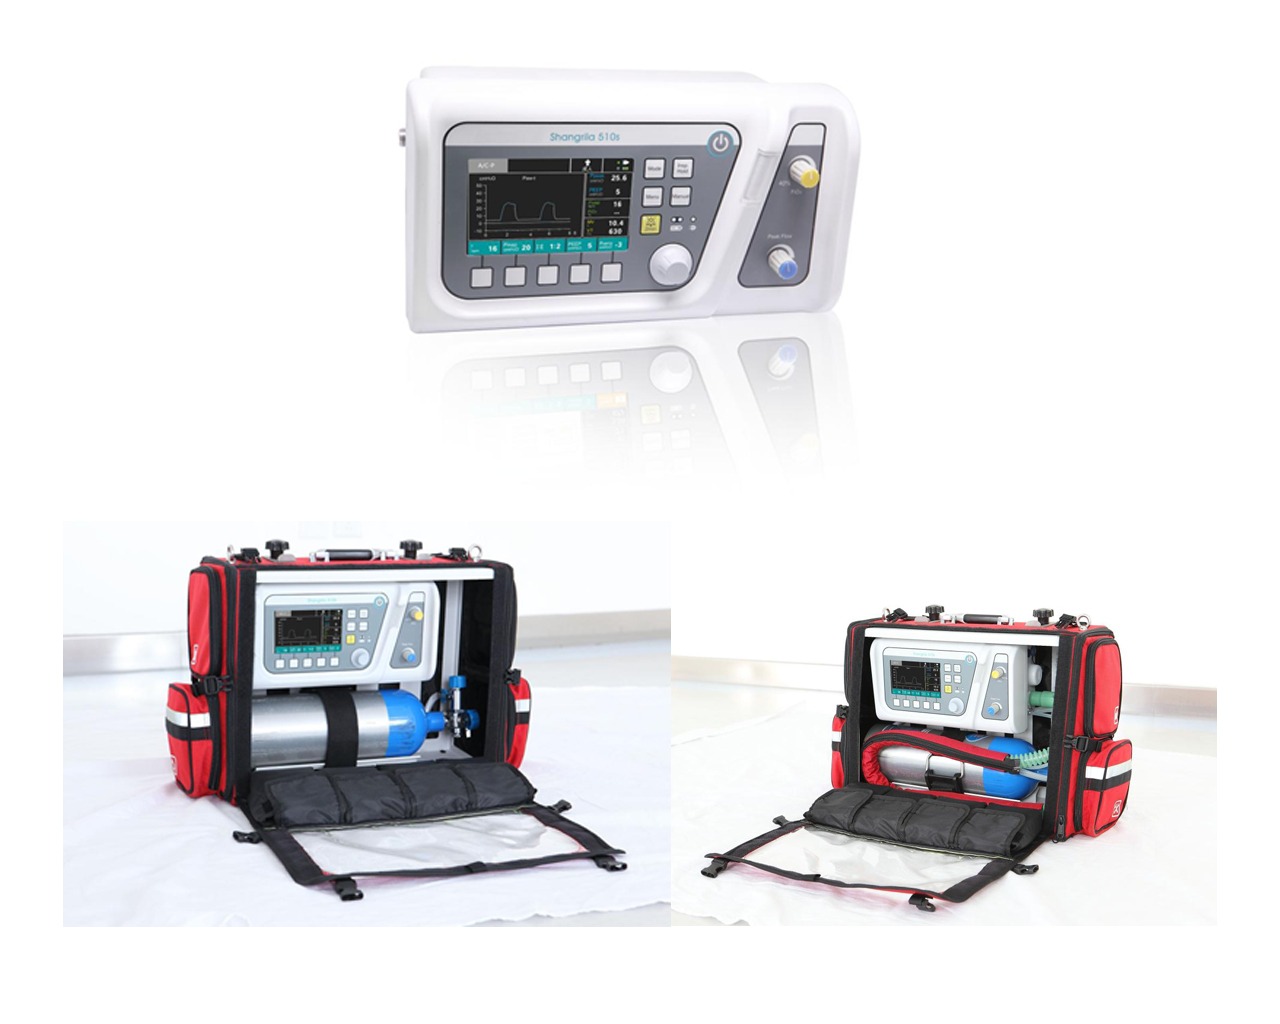 Coronavirus Test Kit - Covid-19 Test Kits, 2019-nCoV IgG/IgM Rapid Test Cassette